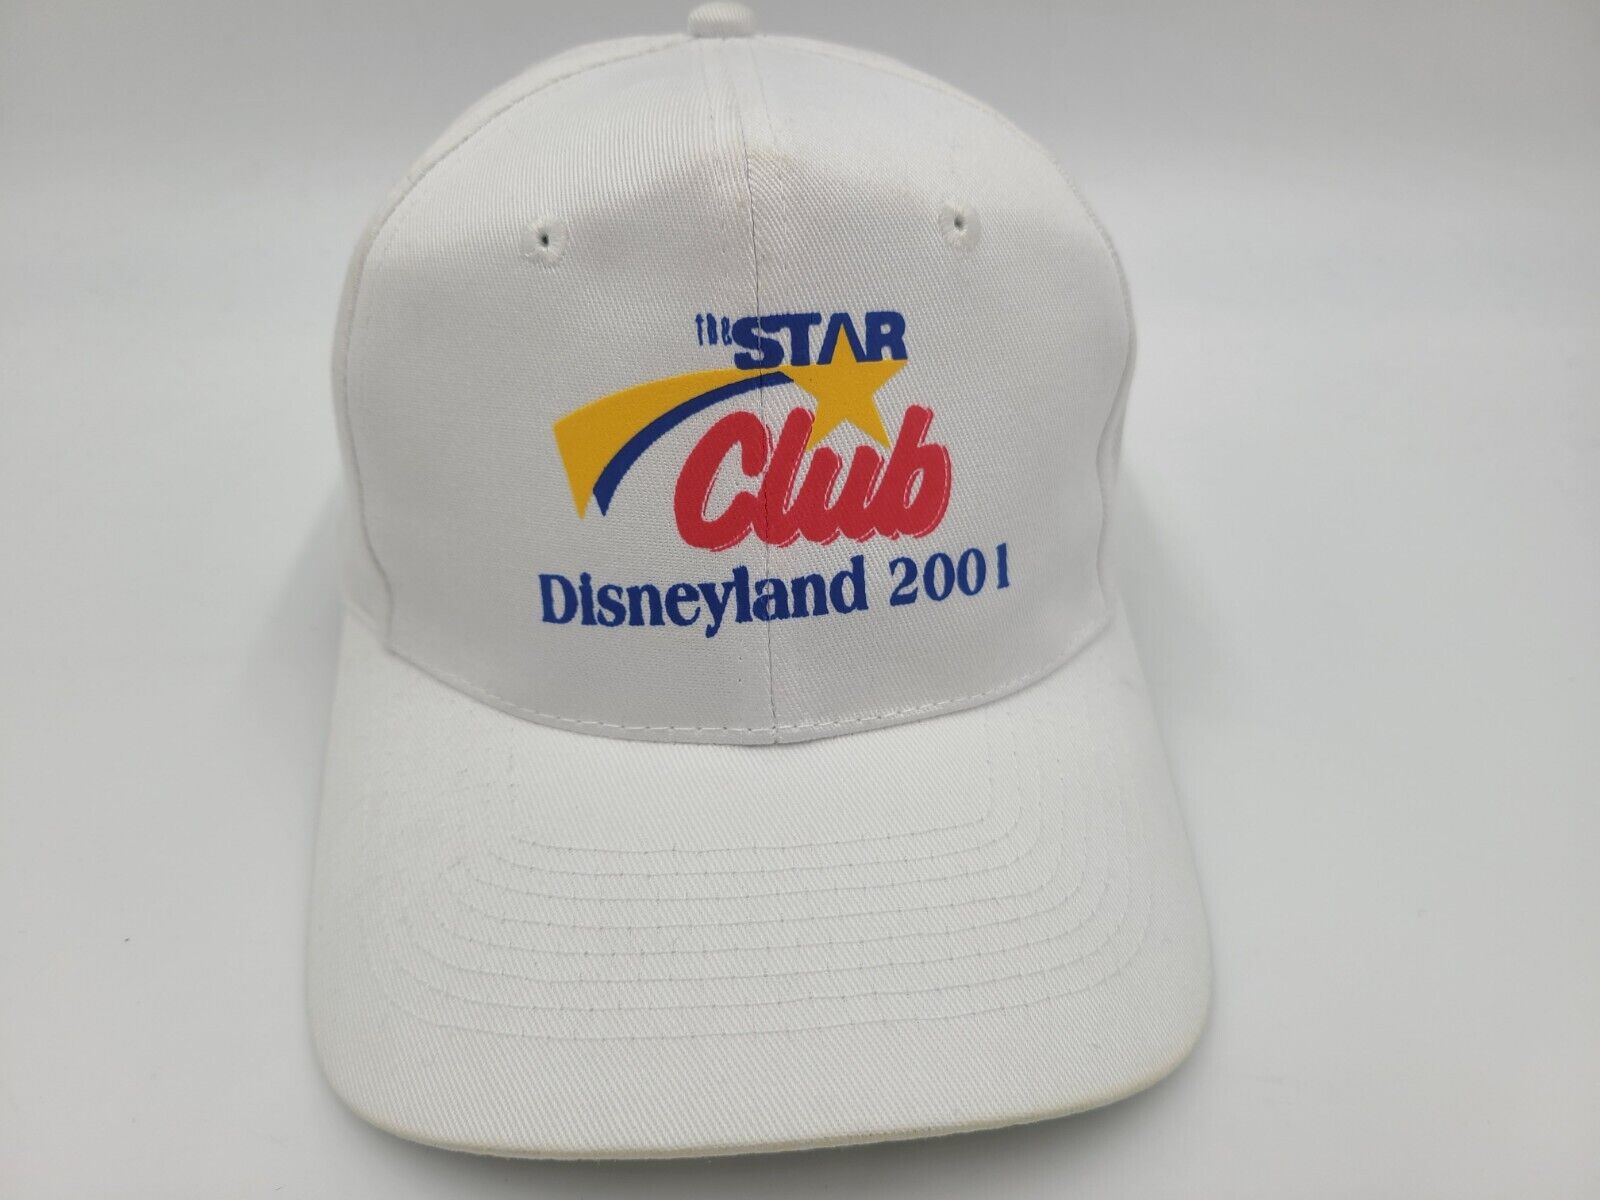 Vintage Disneyland 2001 The Star Club Snapback Hat Cap Disney Men Women White